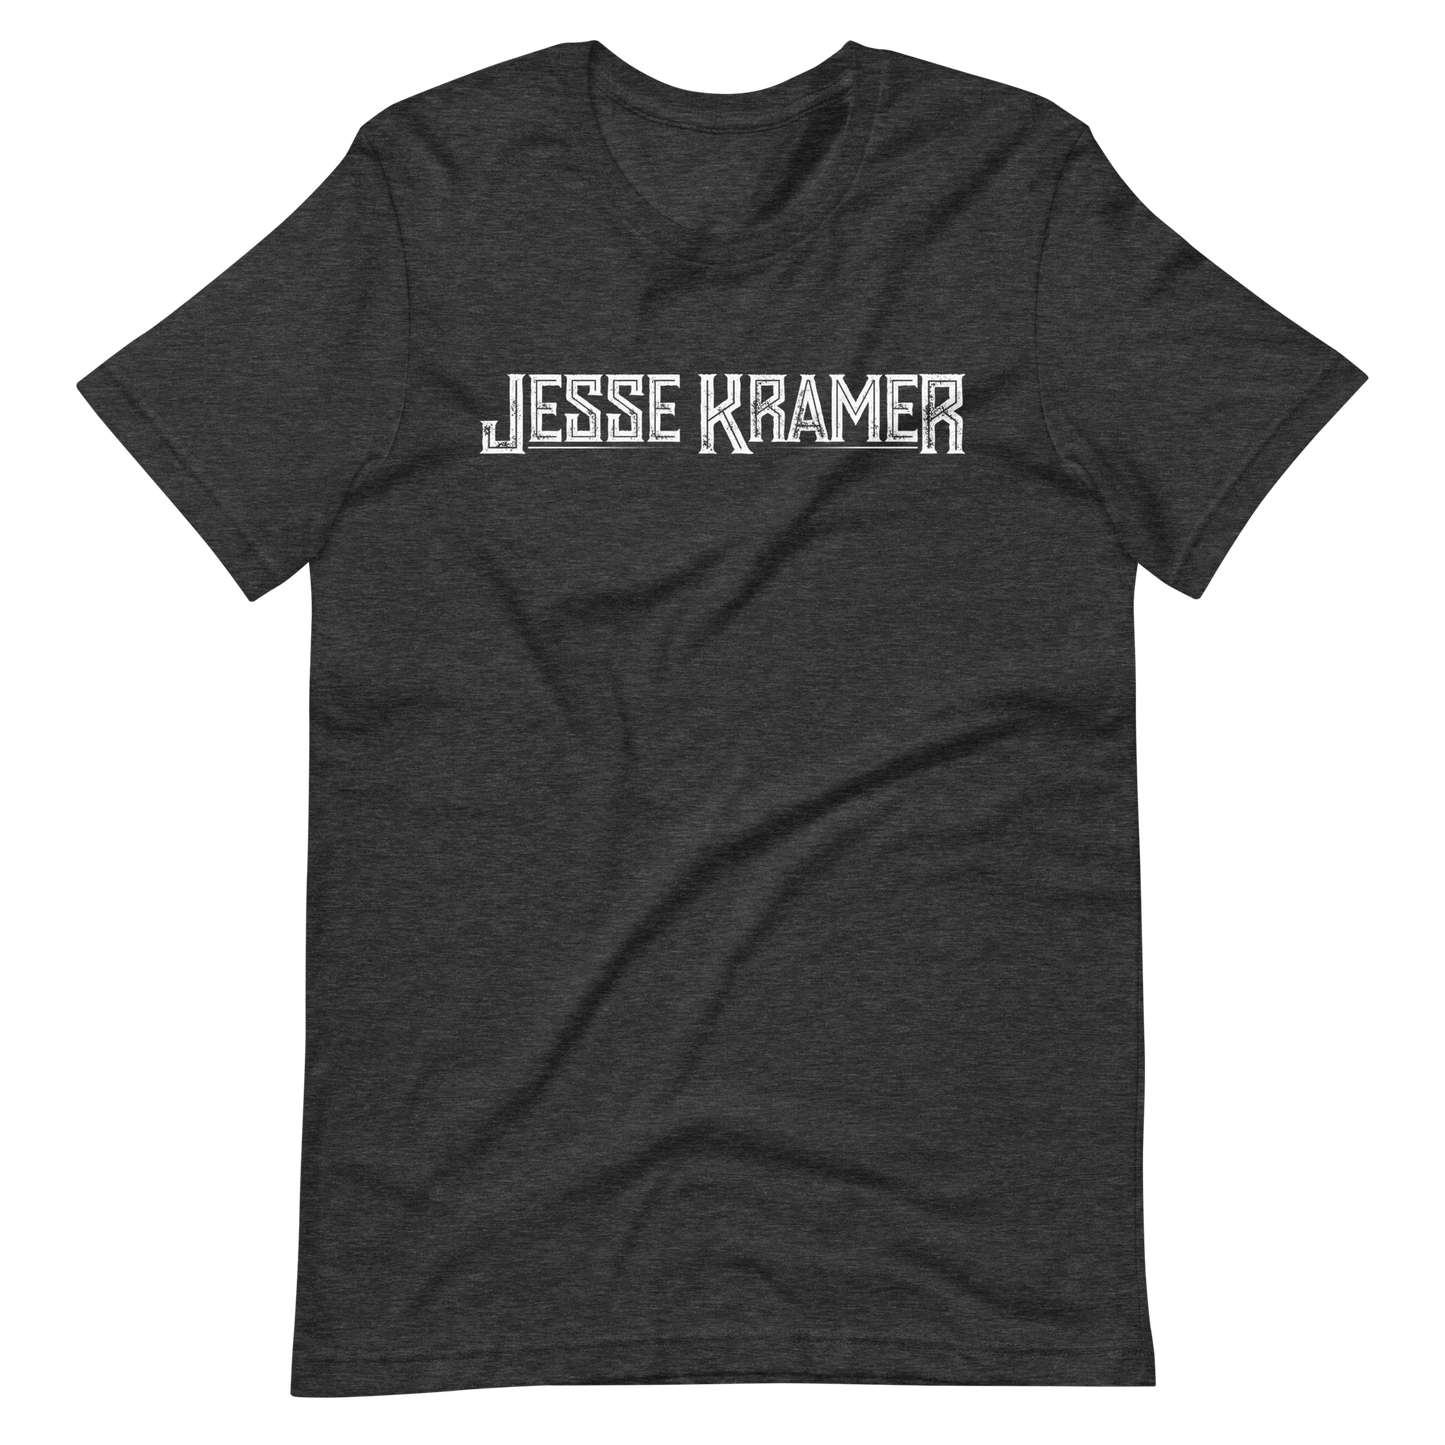 Jesse Kramer Logo Tee